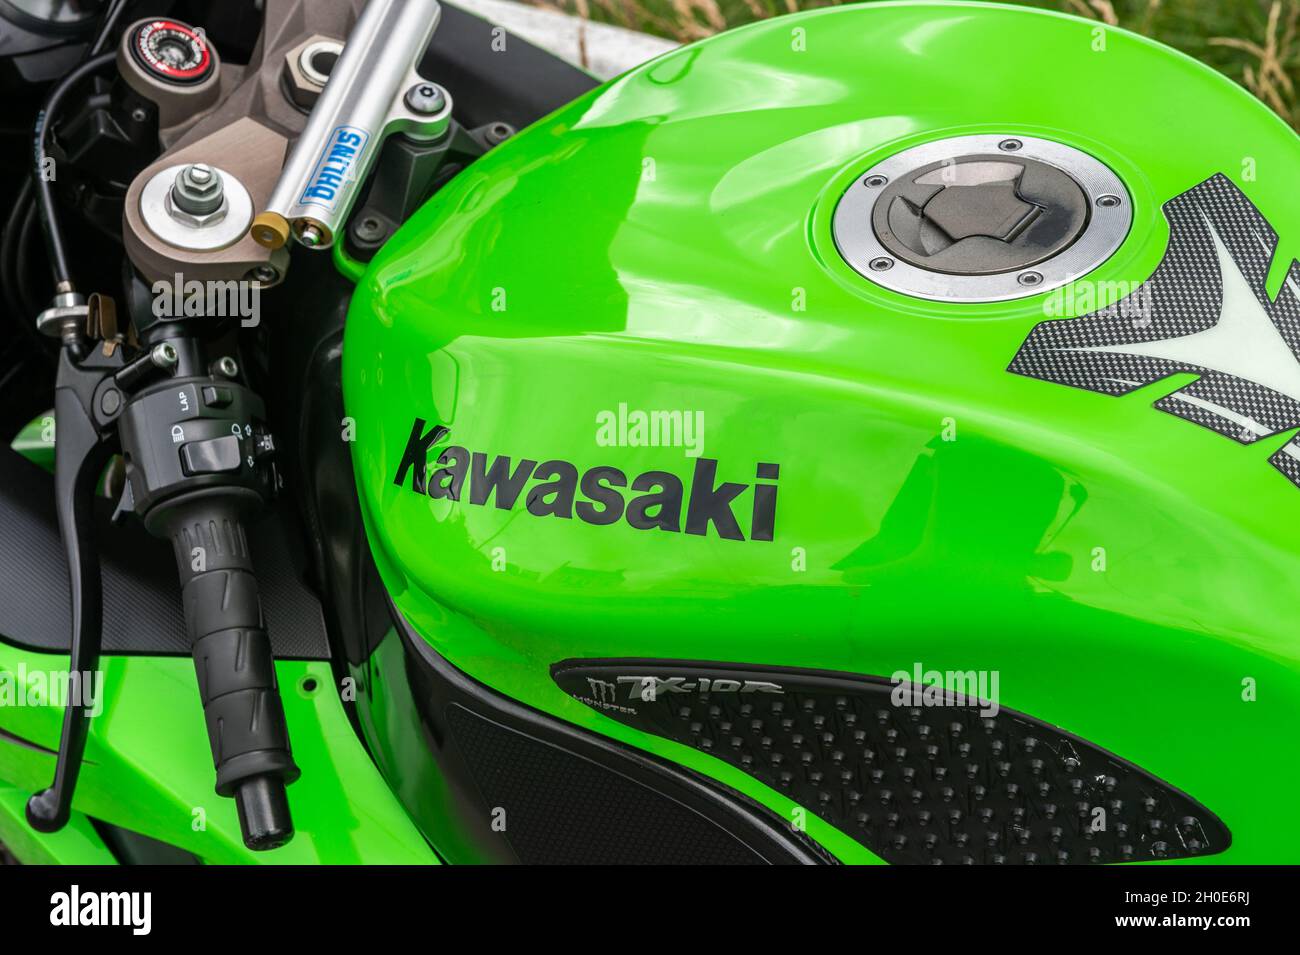 Kawasaki zx 10r hi-res stock photography and images - Alamy